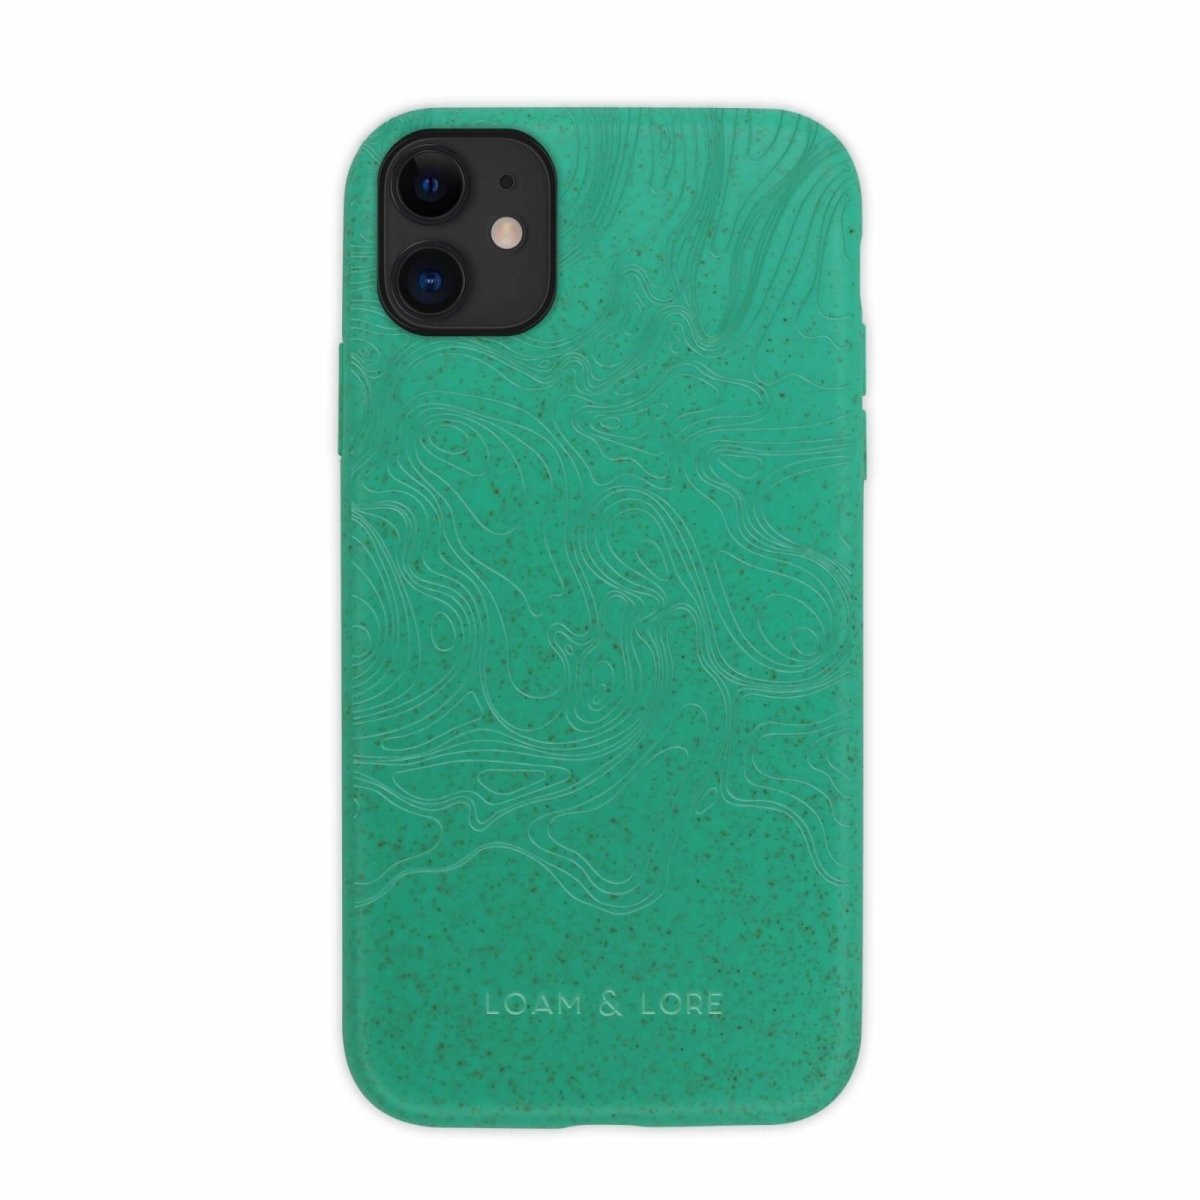 Sale - Biodegradable iPhone 11 Case - Loam & Lore